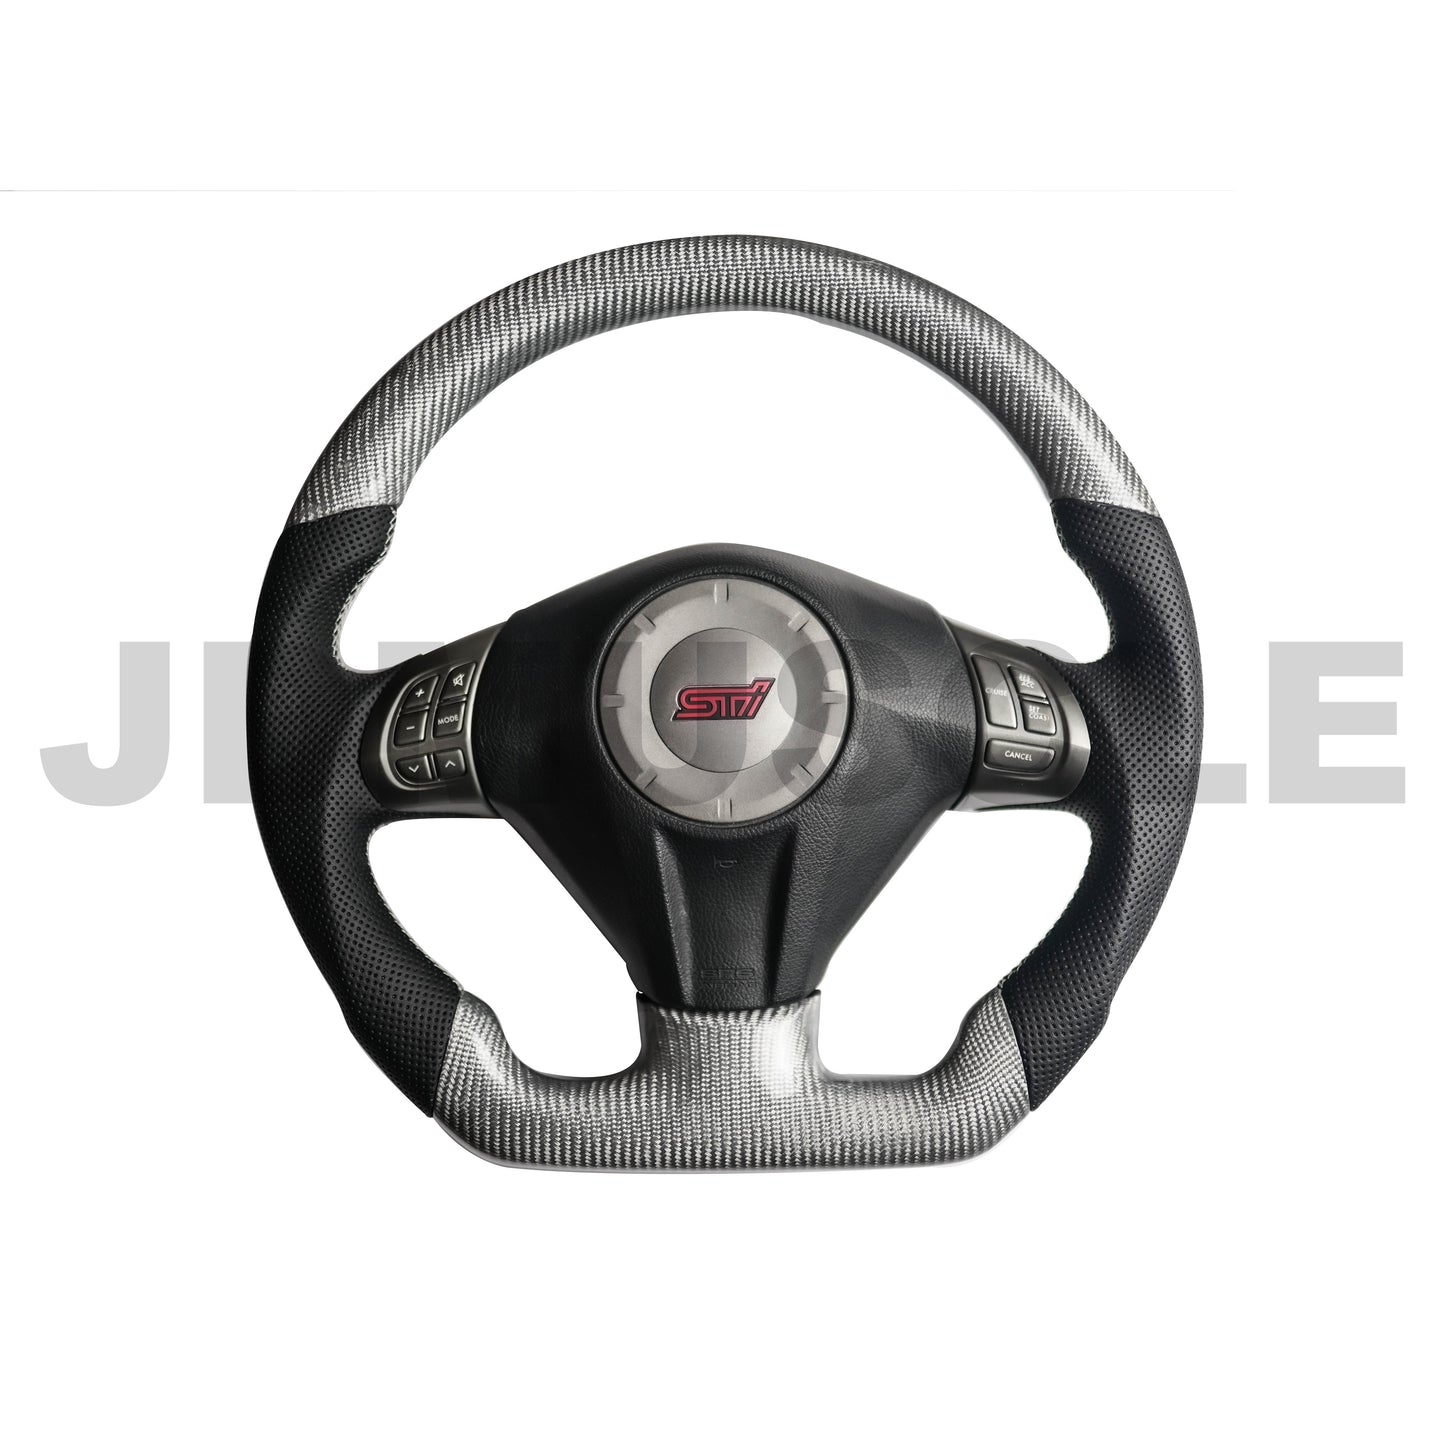 JDMuscle Custom Carbon Fiber Steering Wheel for 2008-2014 WRX/STI *(OPEN BOX) *Silver CF w/ Black Perf. Leather & white stiching-Steering Wheels-JDMuscle-JDMuscle